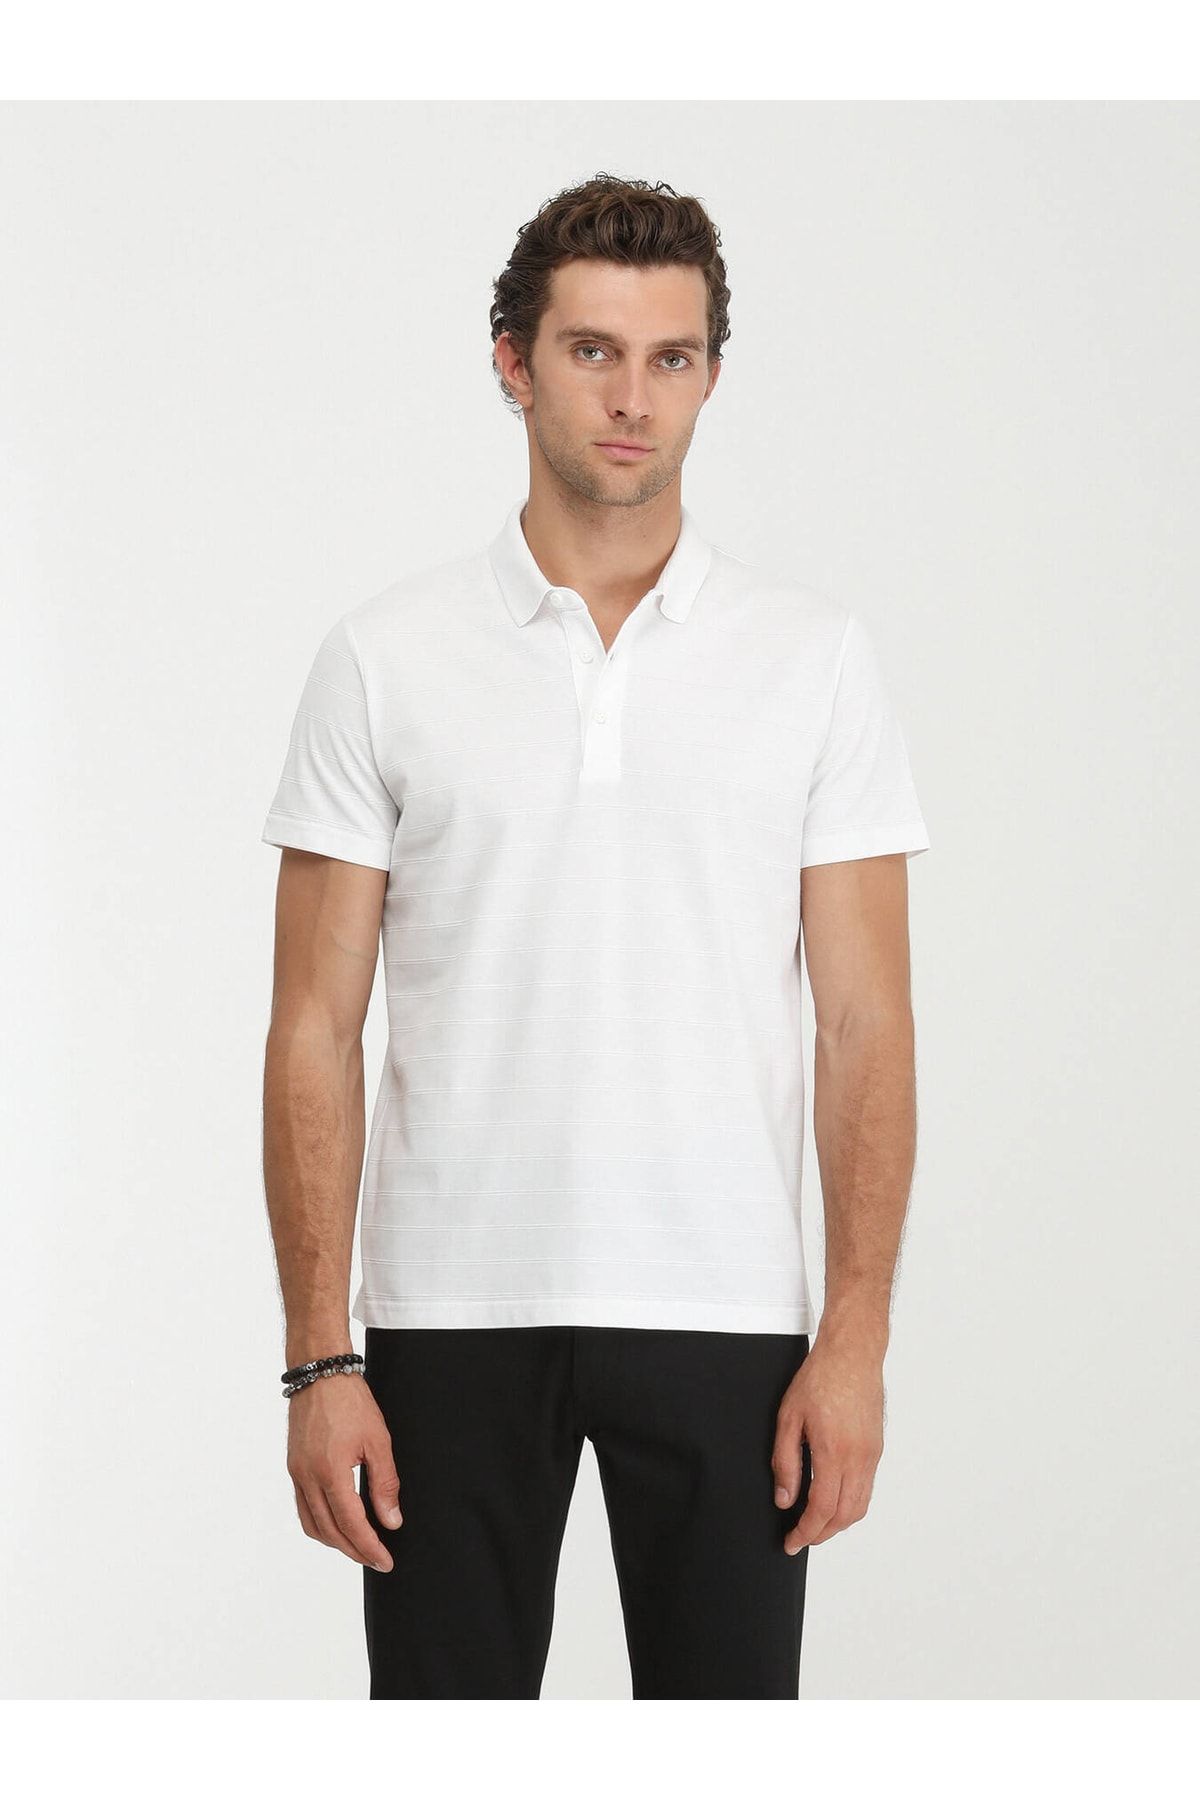 Kip Beyaz Jakarlı Polo Yaka %100 Pamuk T-shirt